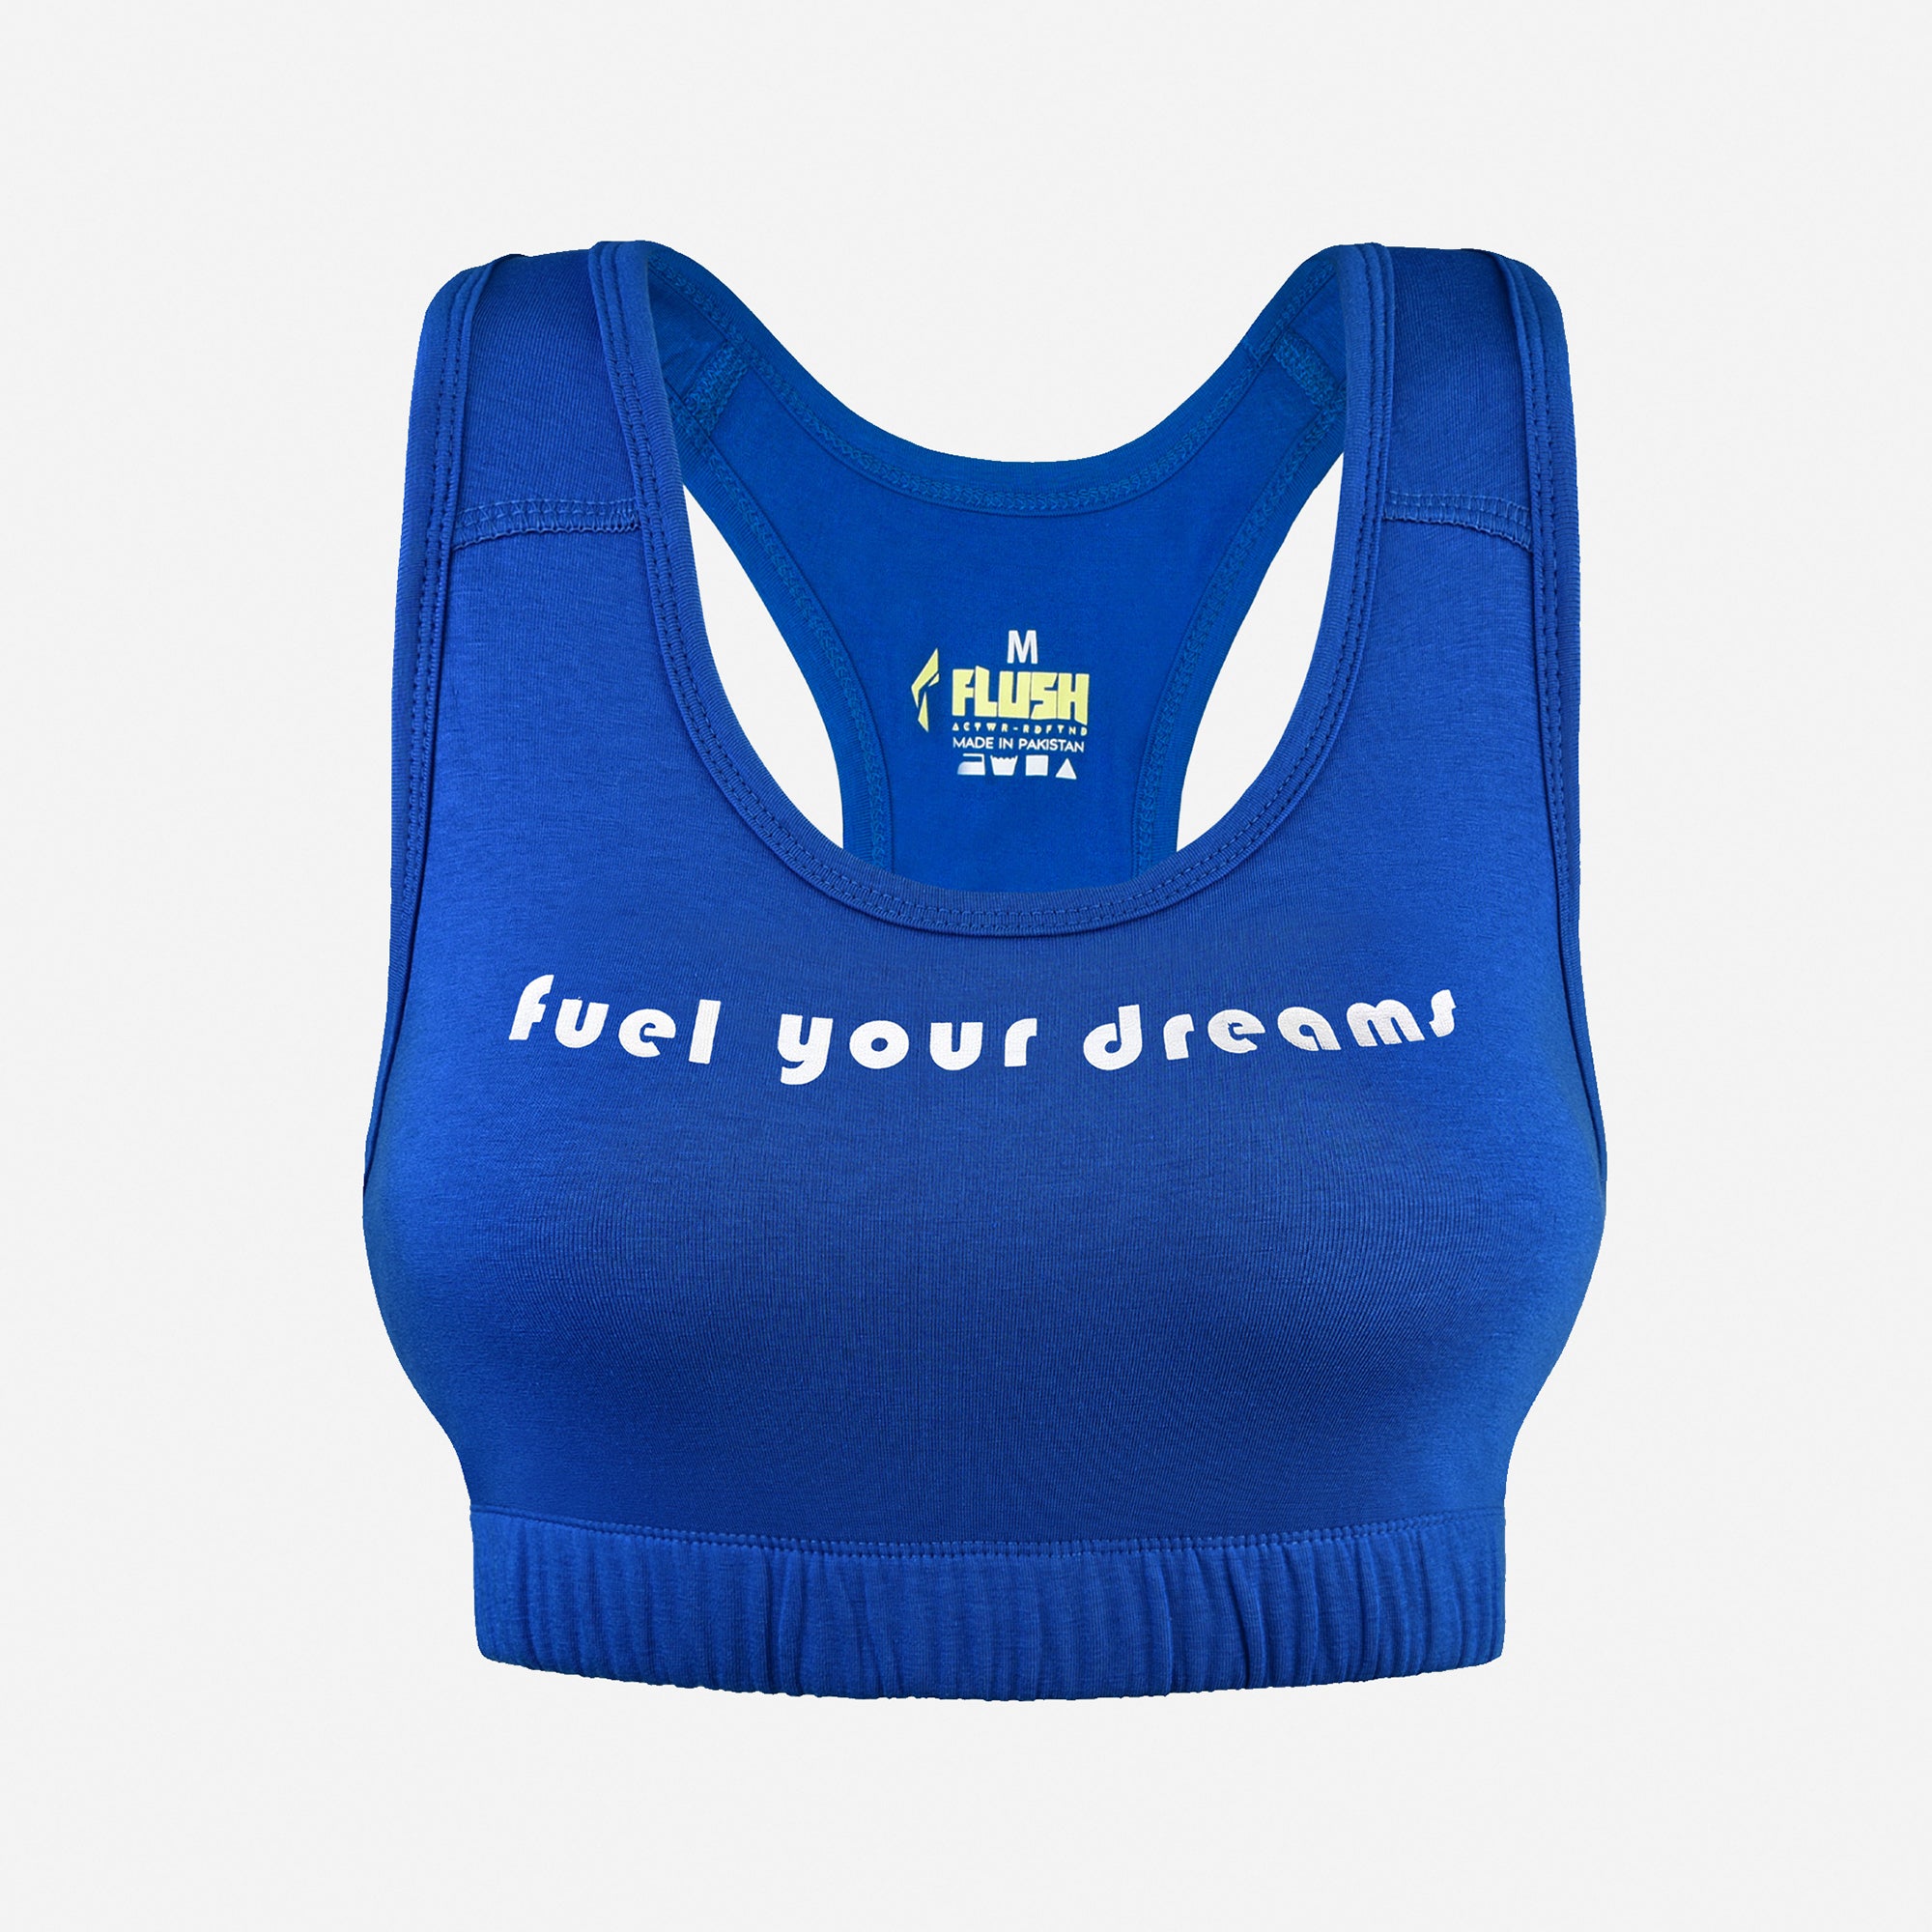 Women's Seamless Sports Bra, Support for Yoga Gym - RoyalBlue - Medium /  Royal Blue